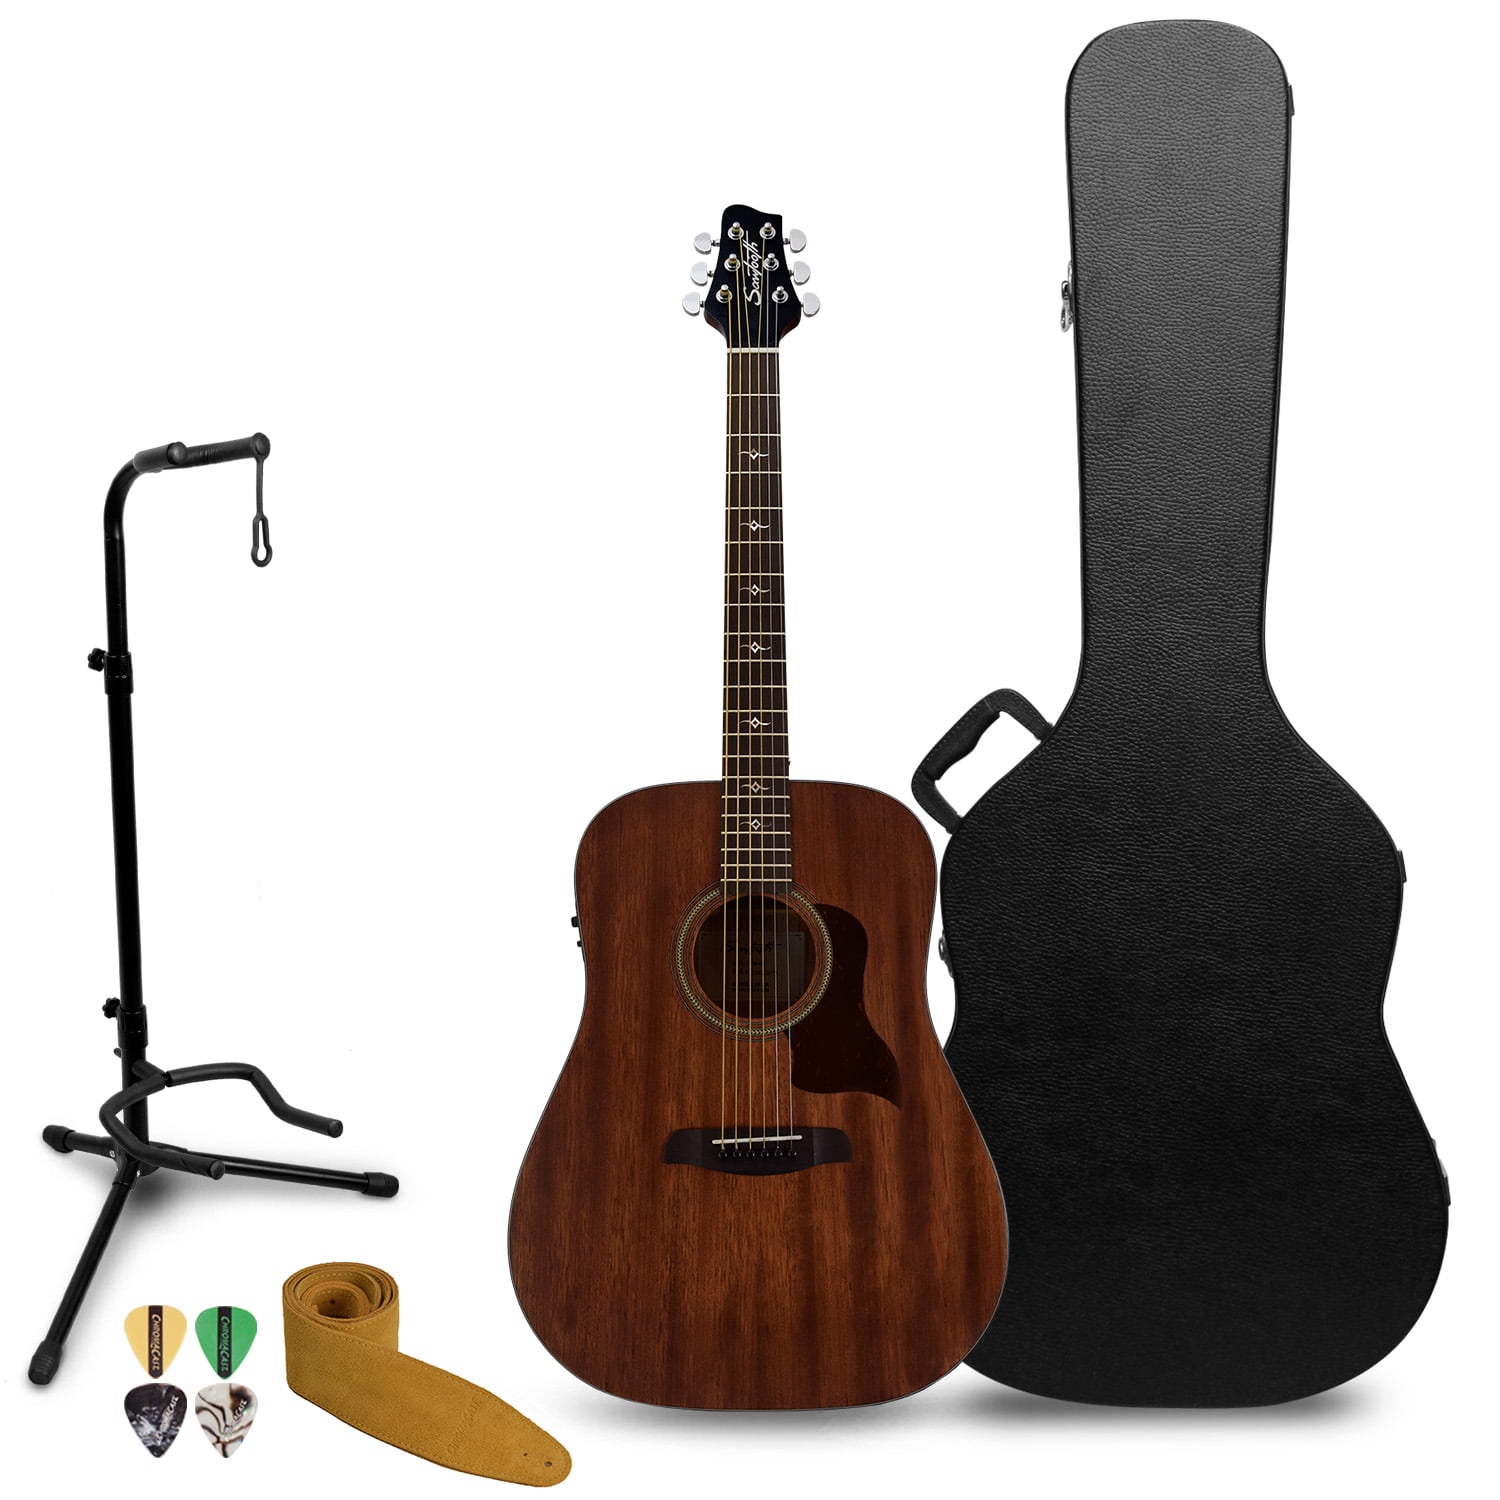 Ebony Body Acoustic Guitars For Sale